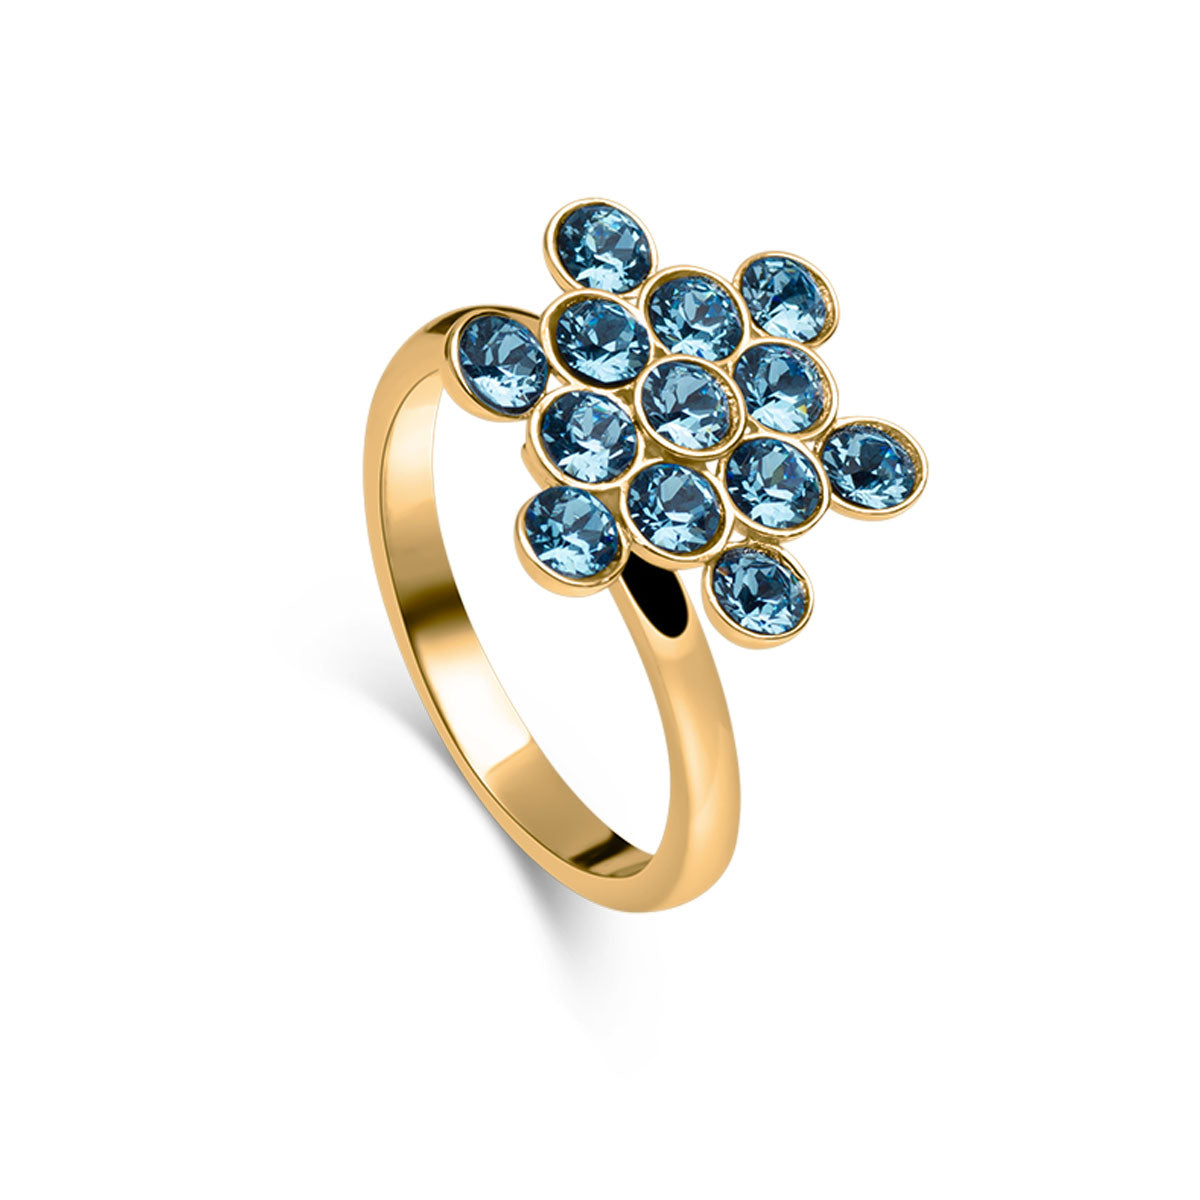 Ring Wildflower 925 Silber Zirkonia blau verstellbar#oberflache_vergoldet